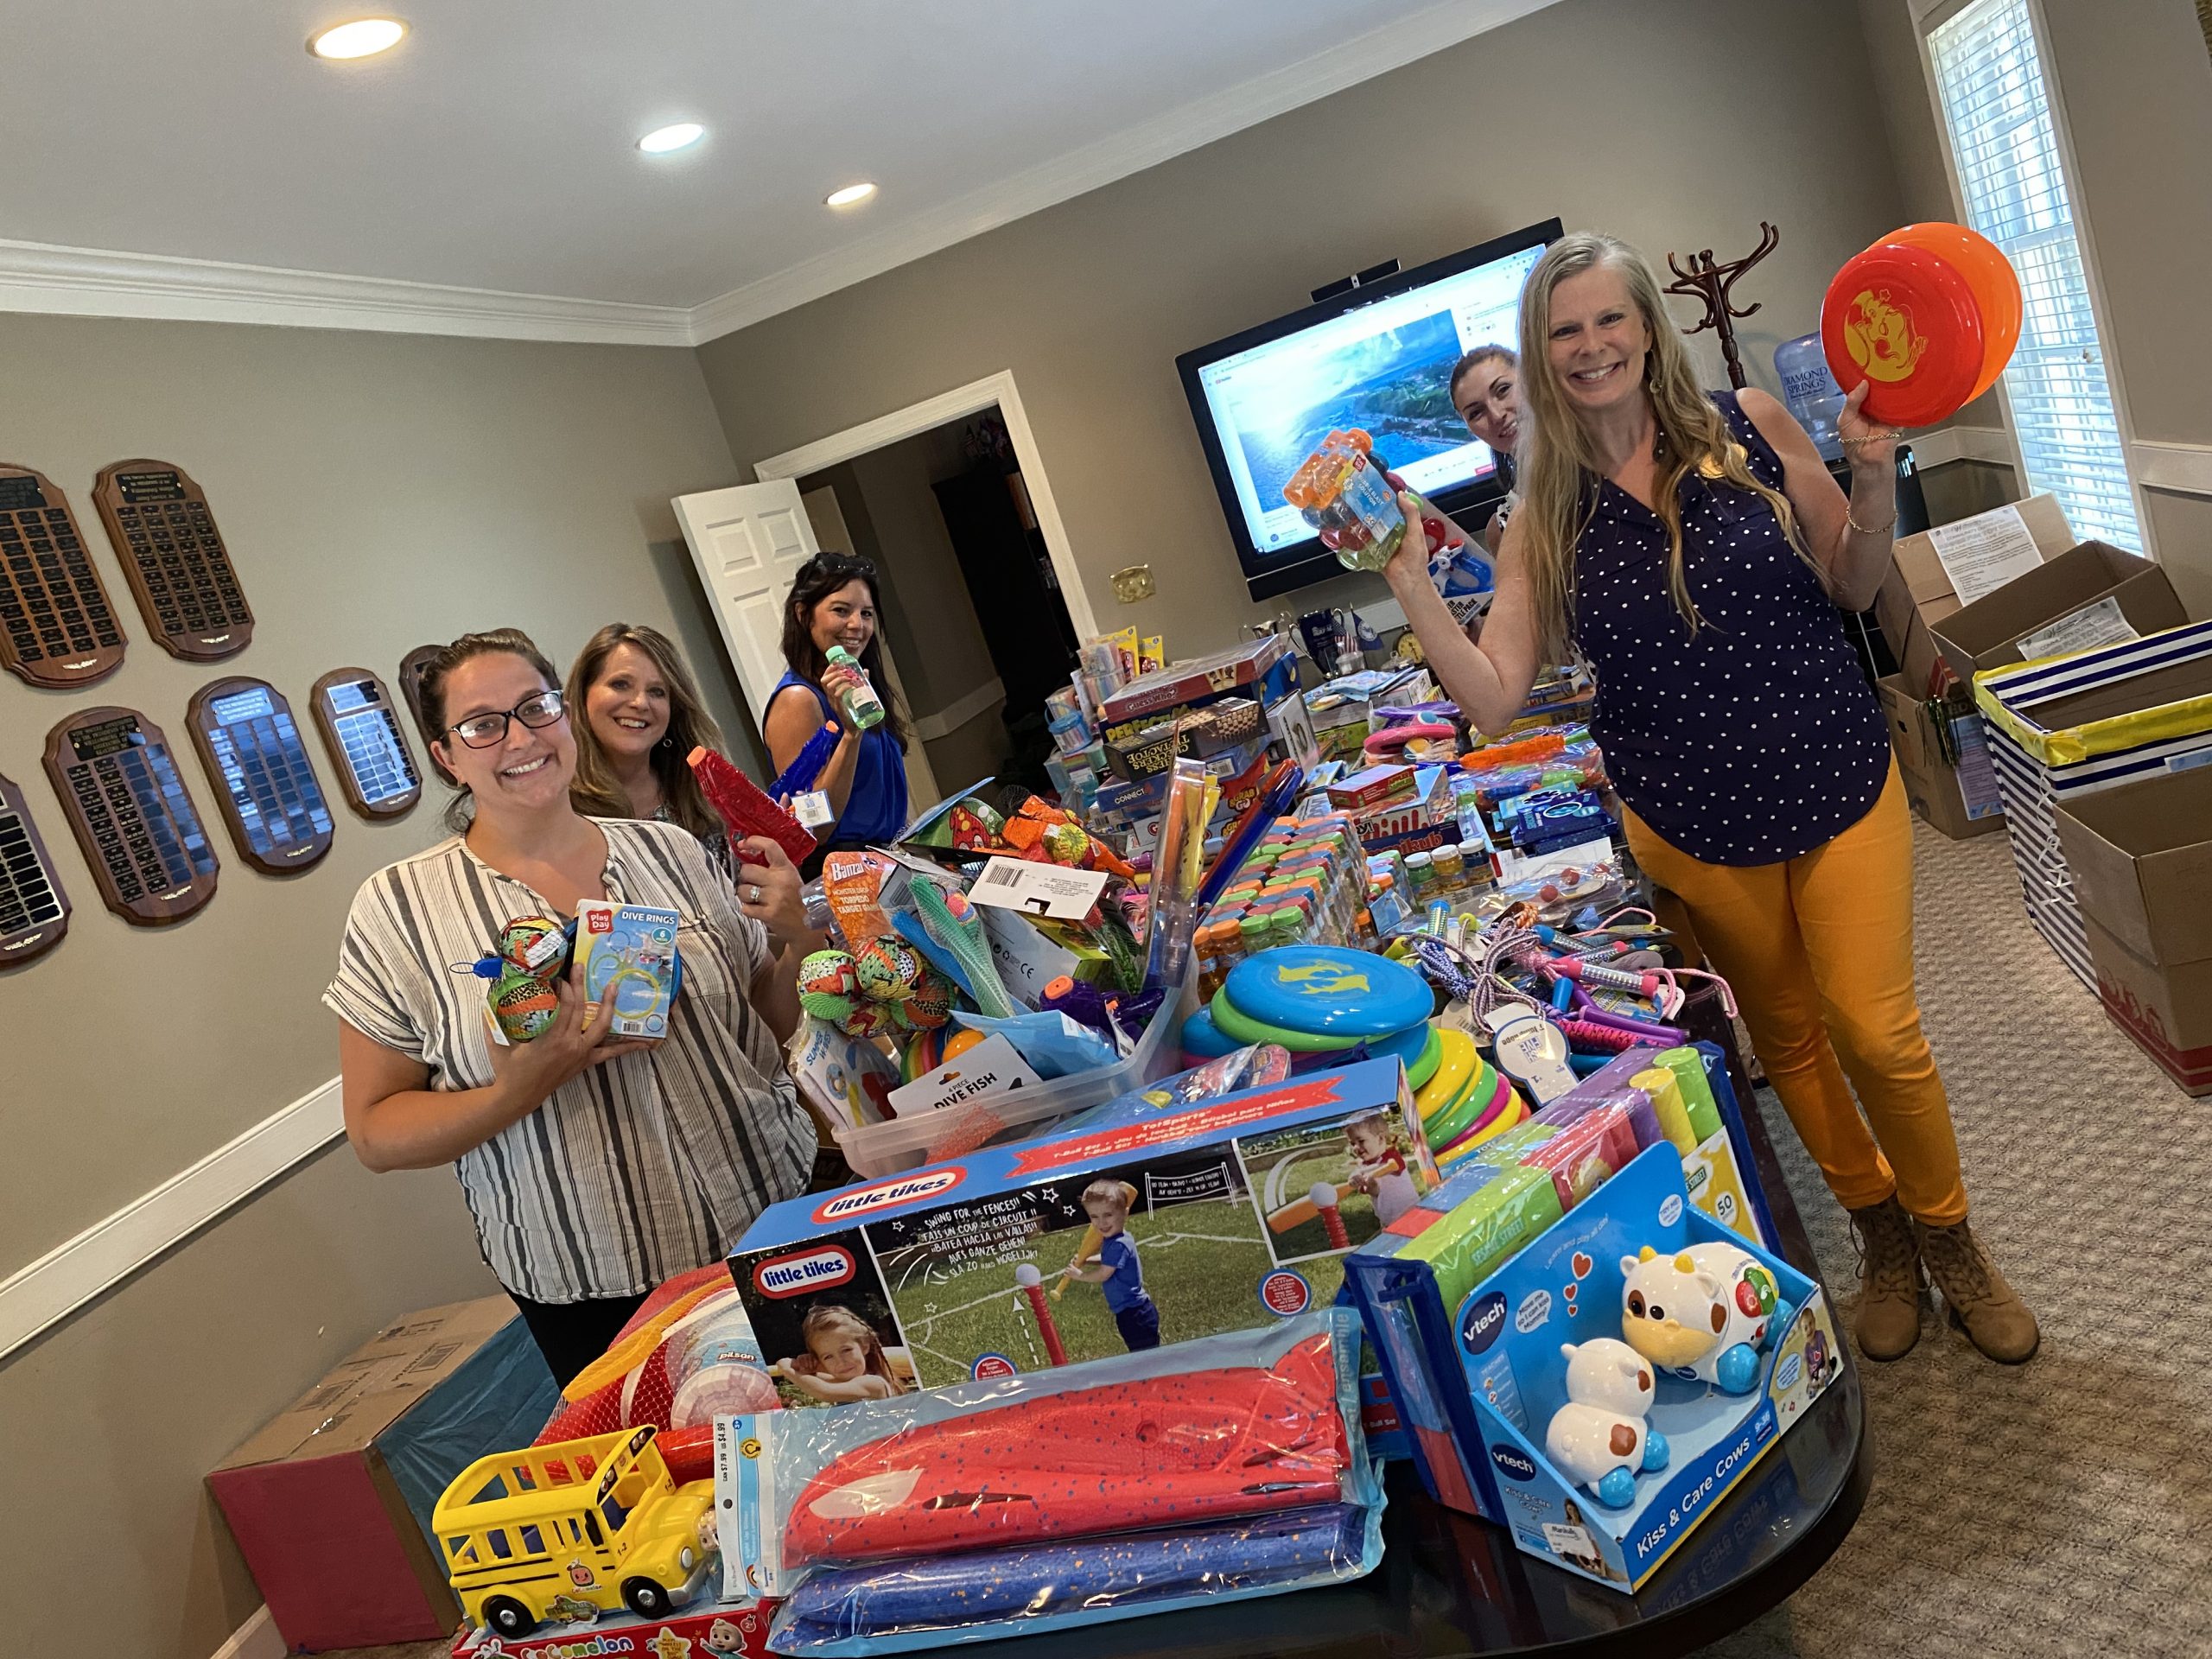 Williamsburg REALTORS donate toys for kids